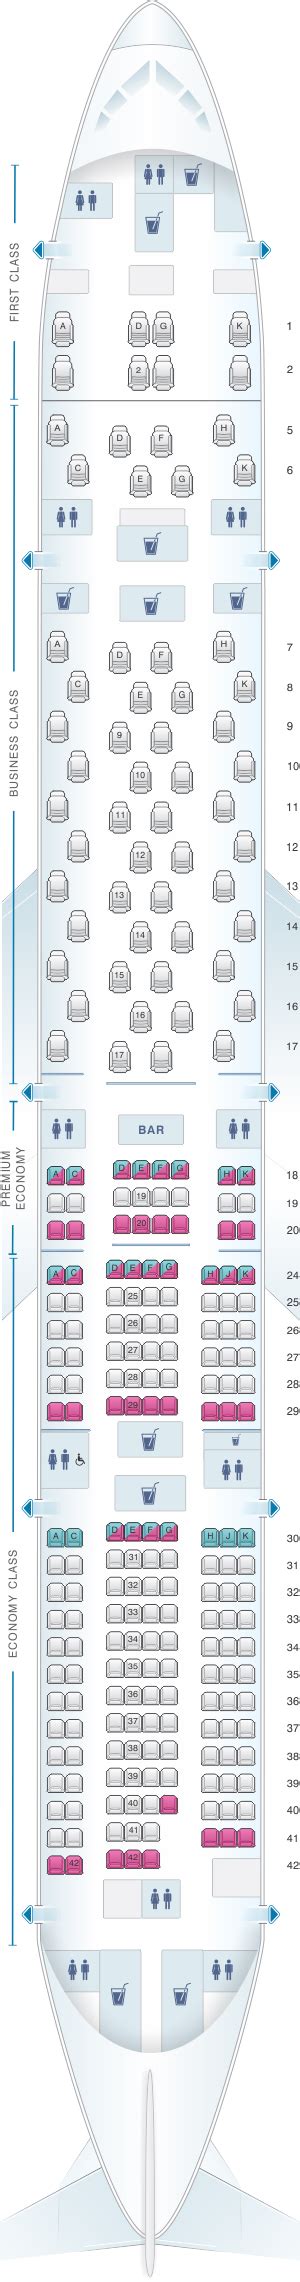 Delta 777 300er Seating Chart Elcho Table